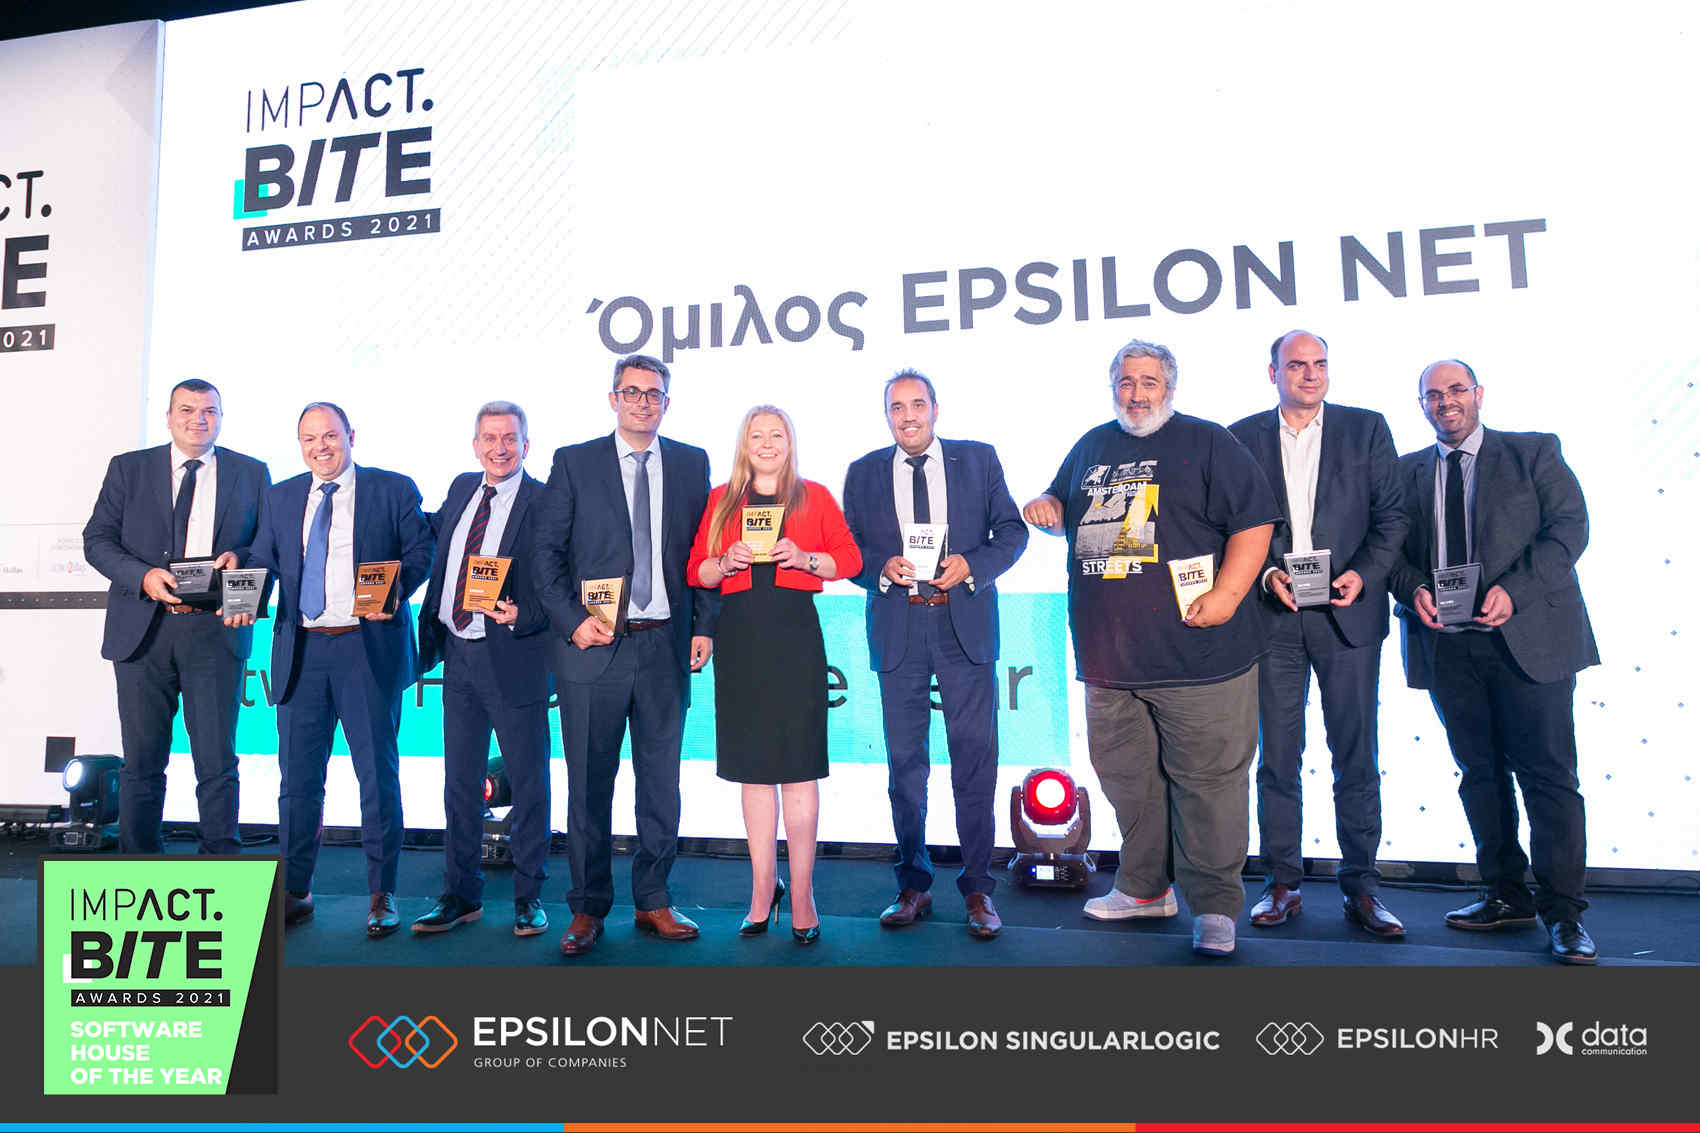 epsilonnet-bite-awards-2021-software-house-of-the-year